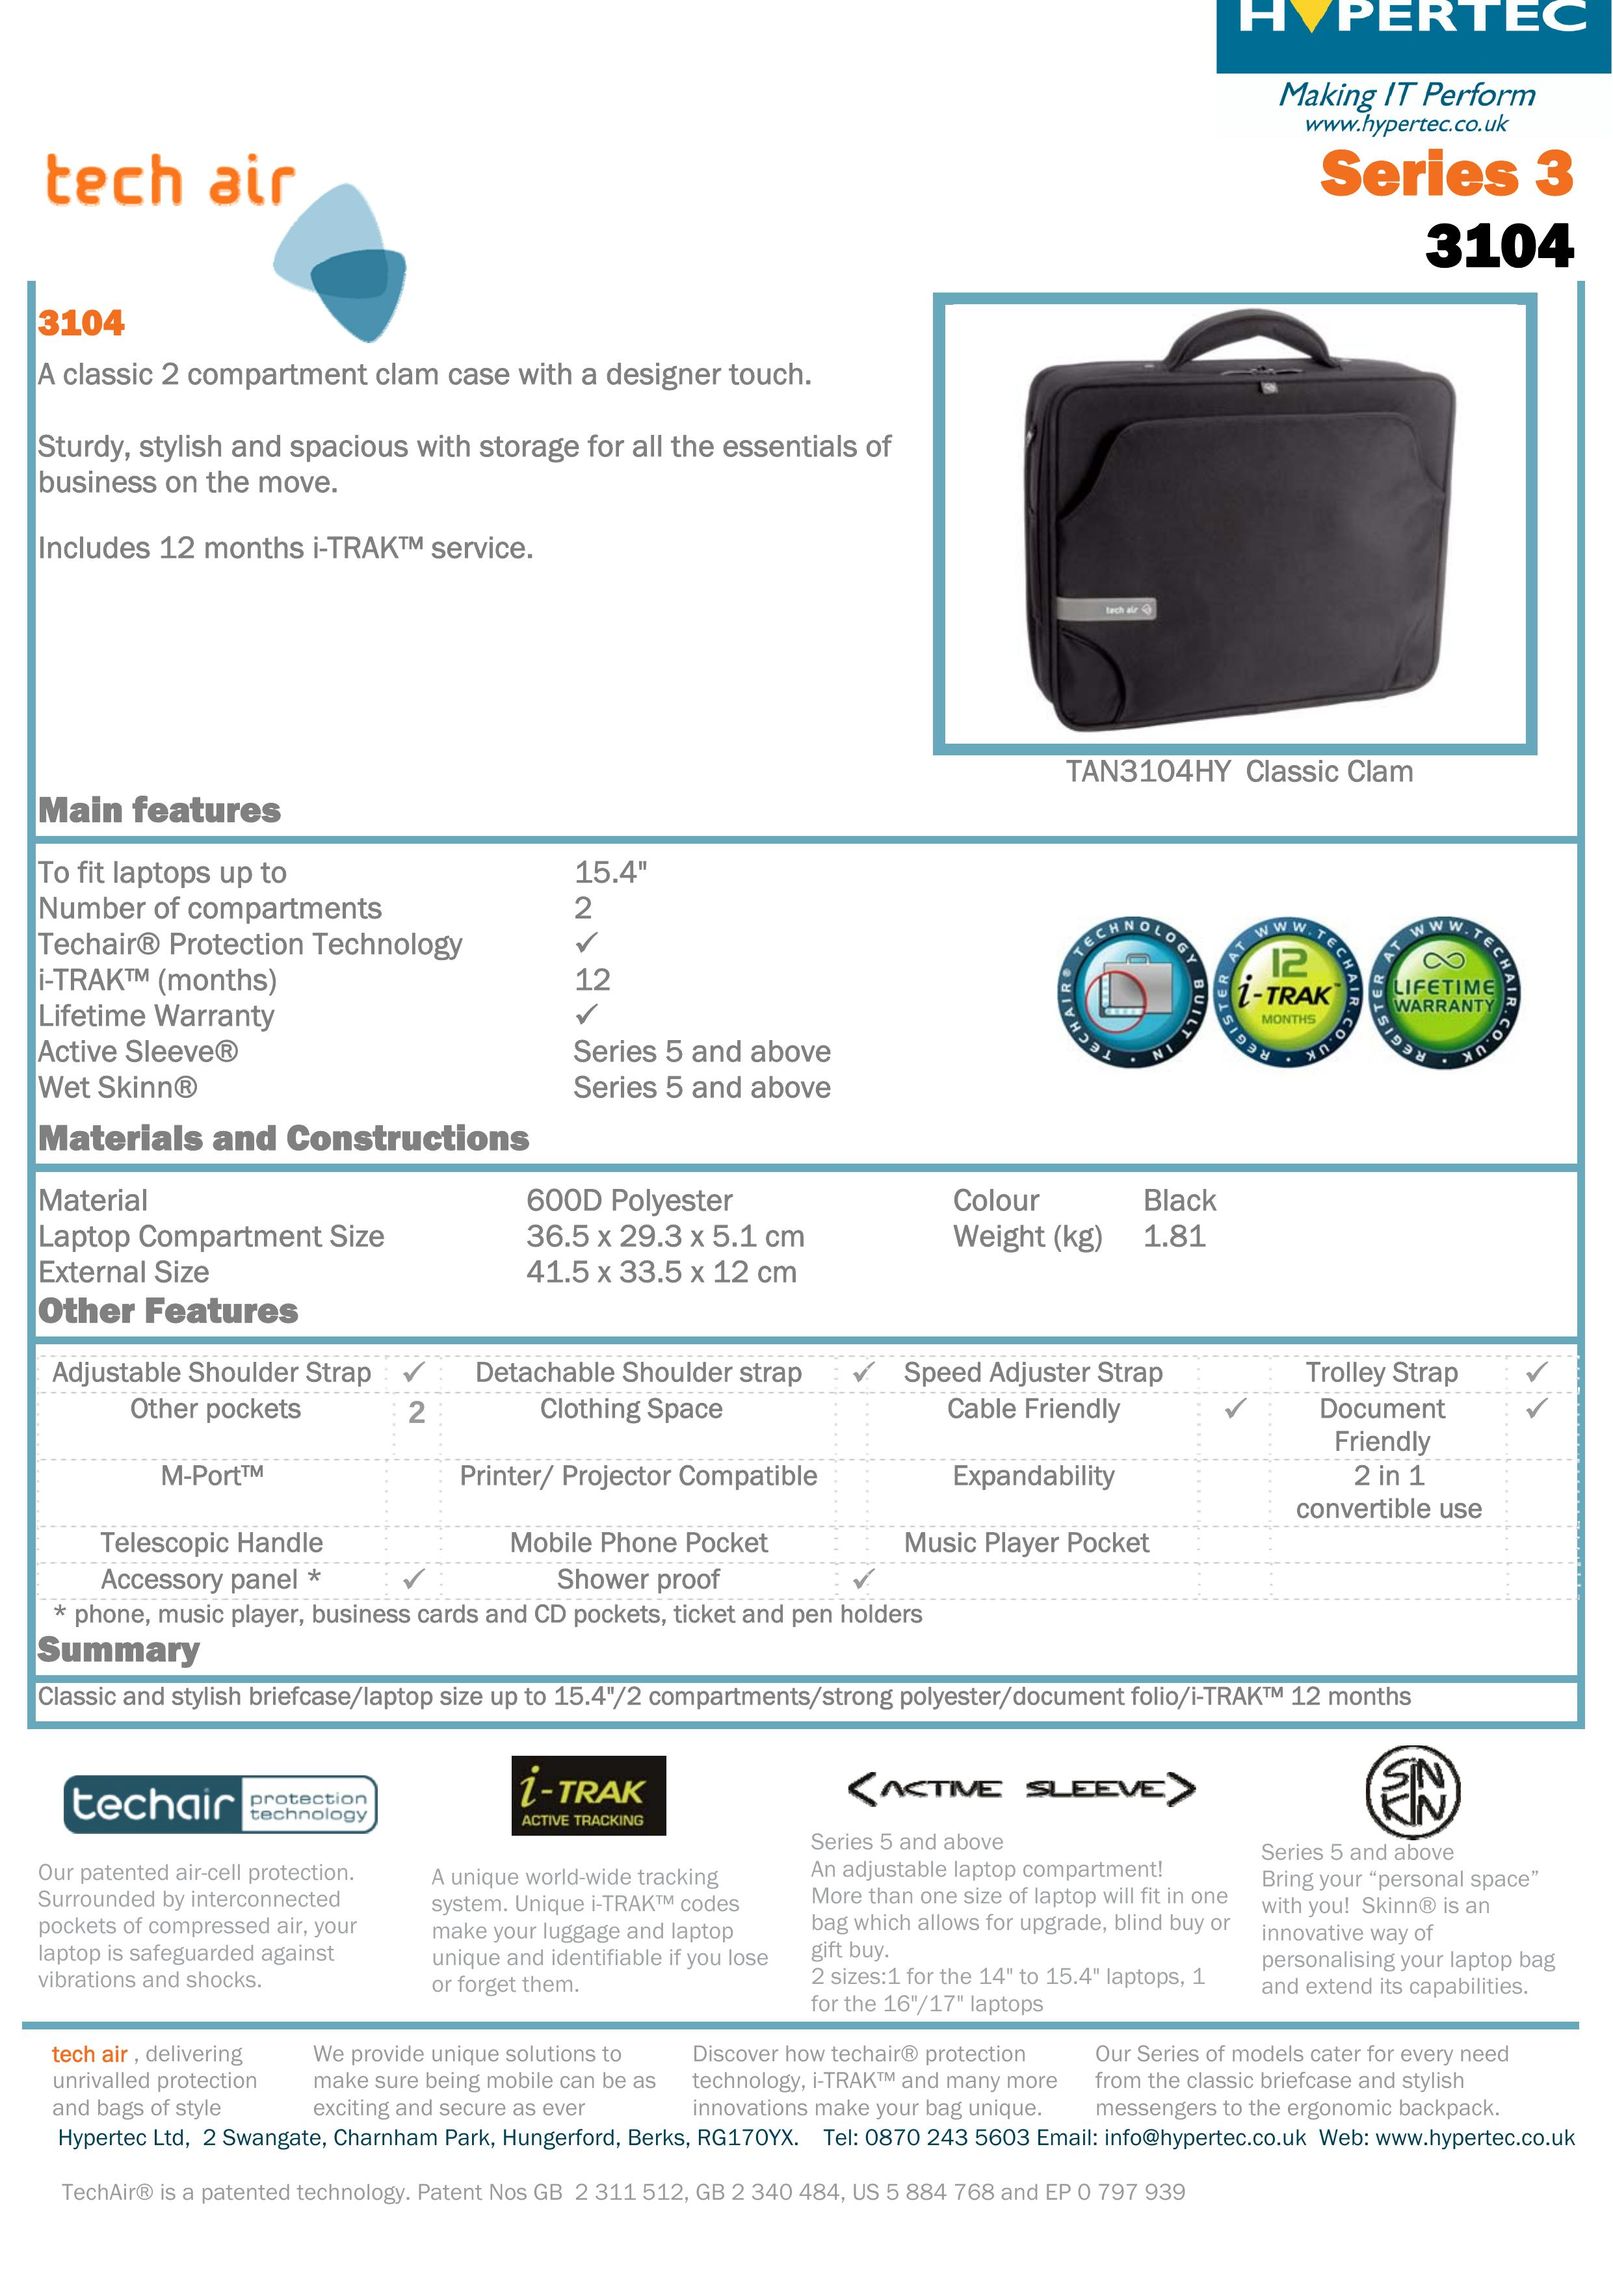 Hypertec 3104 Carrying Case User Manual